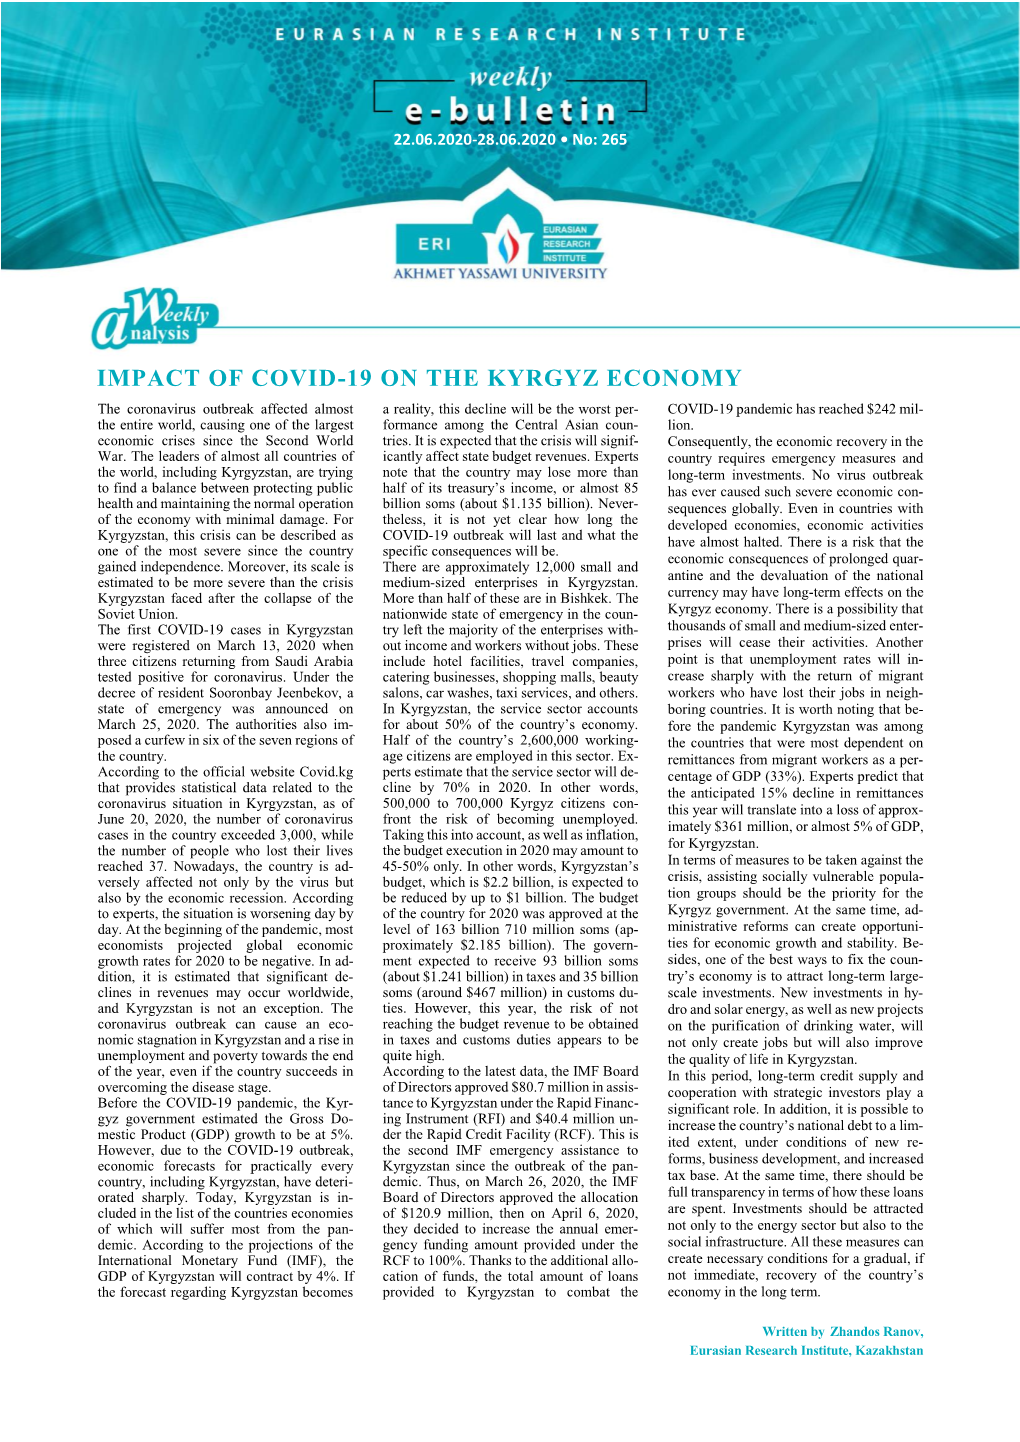 Impact of Covid-19 on the Kyrgyz Economy